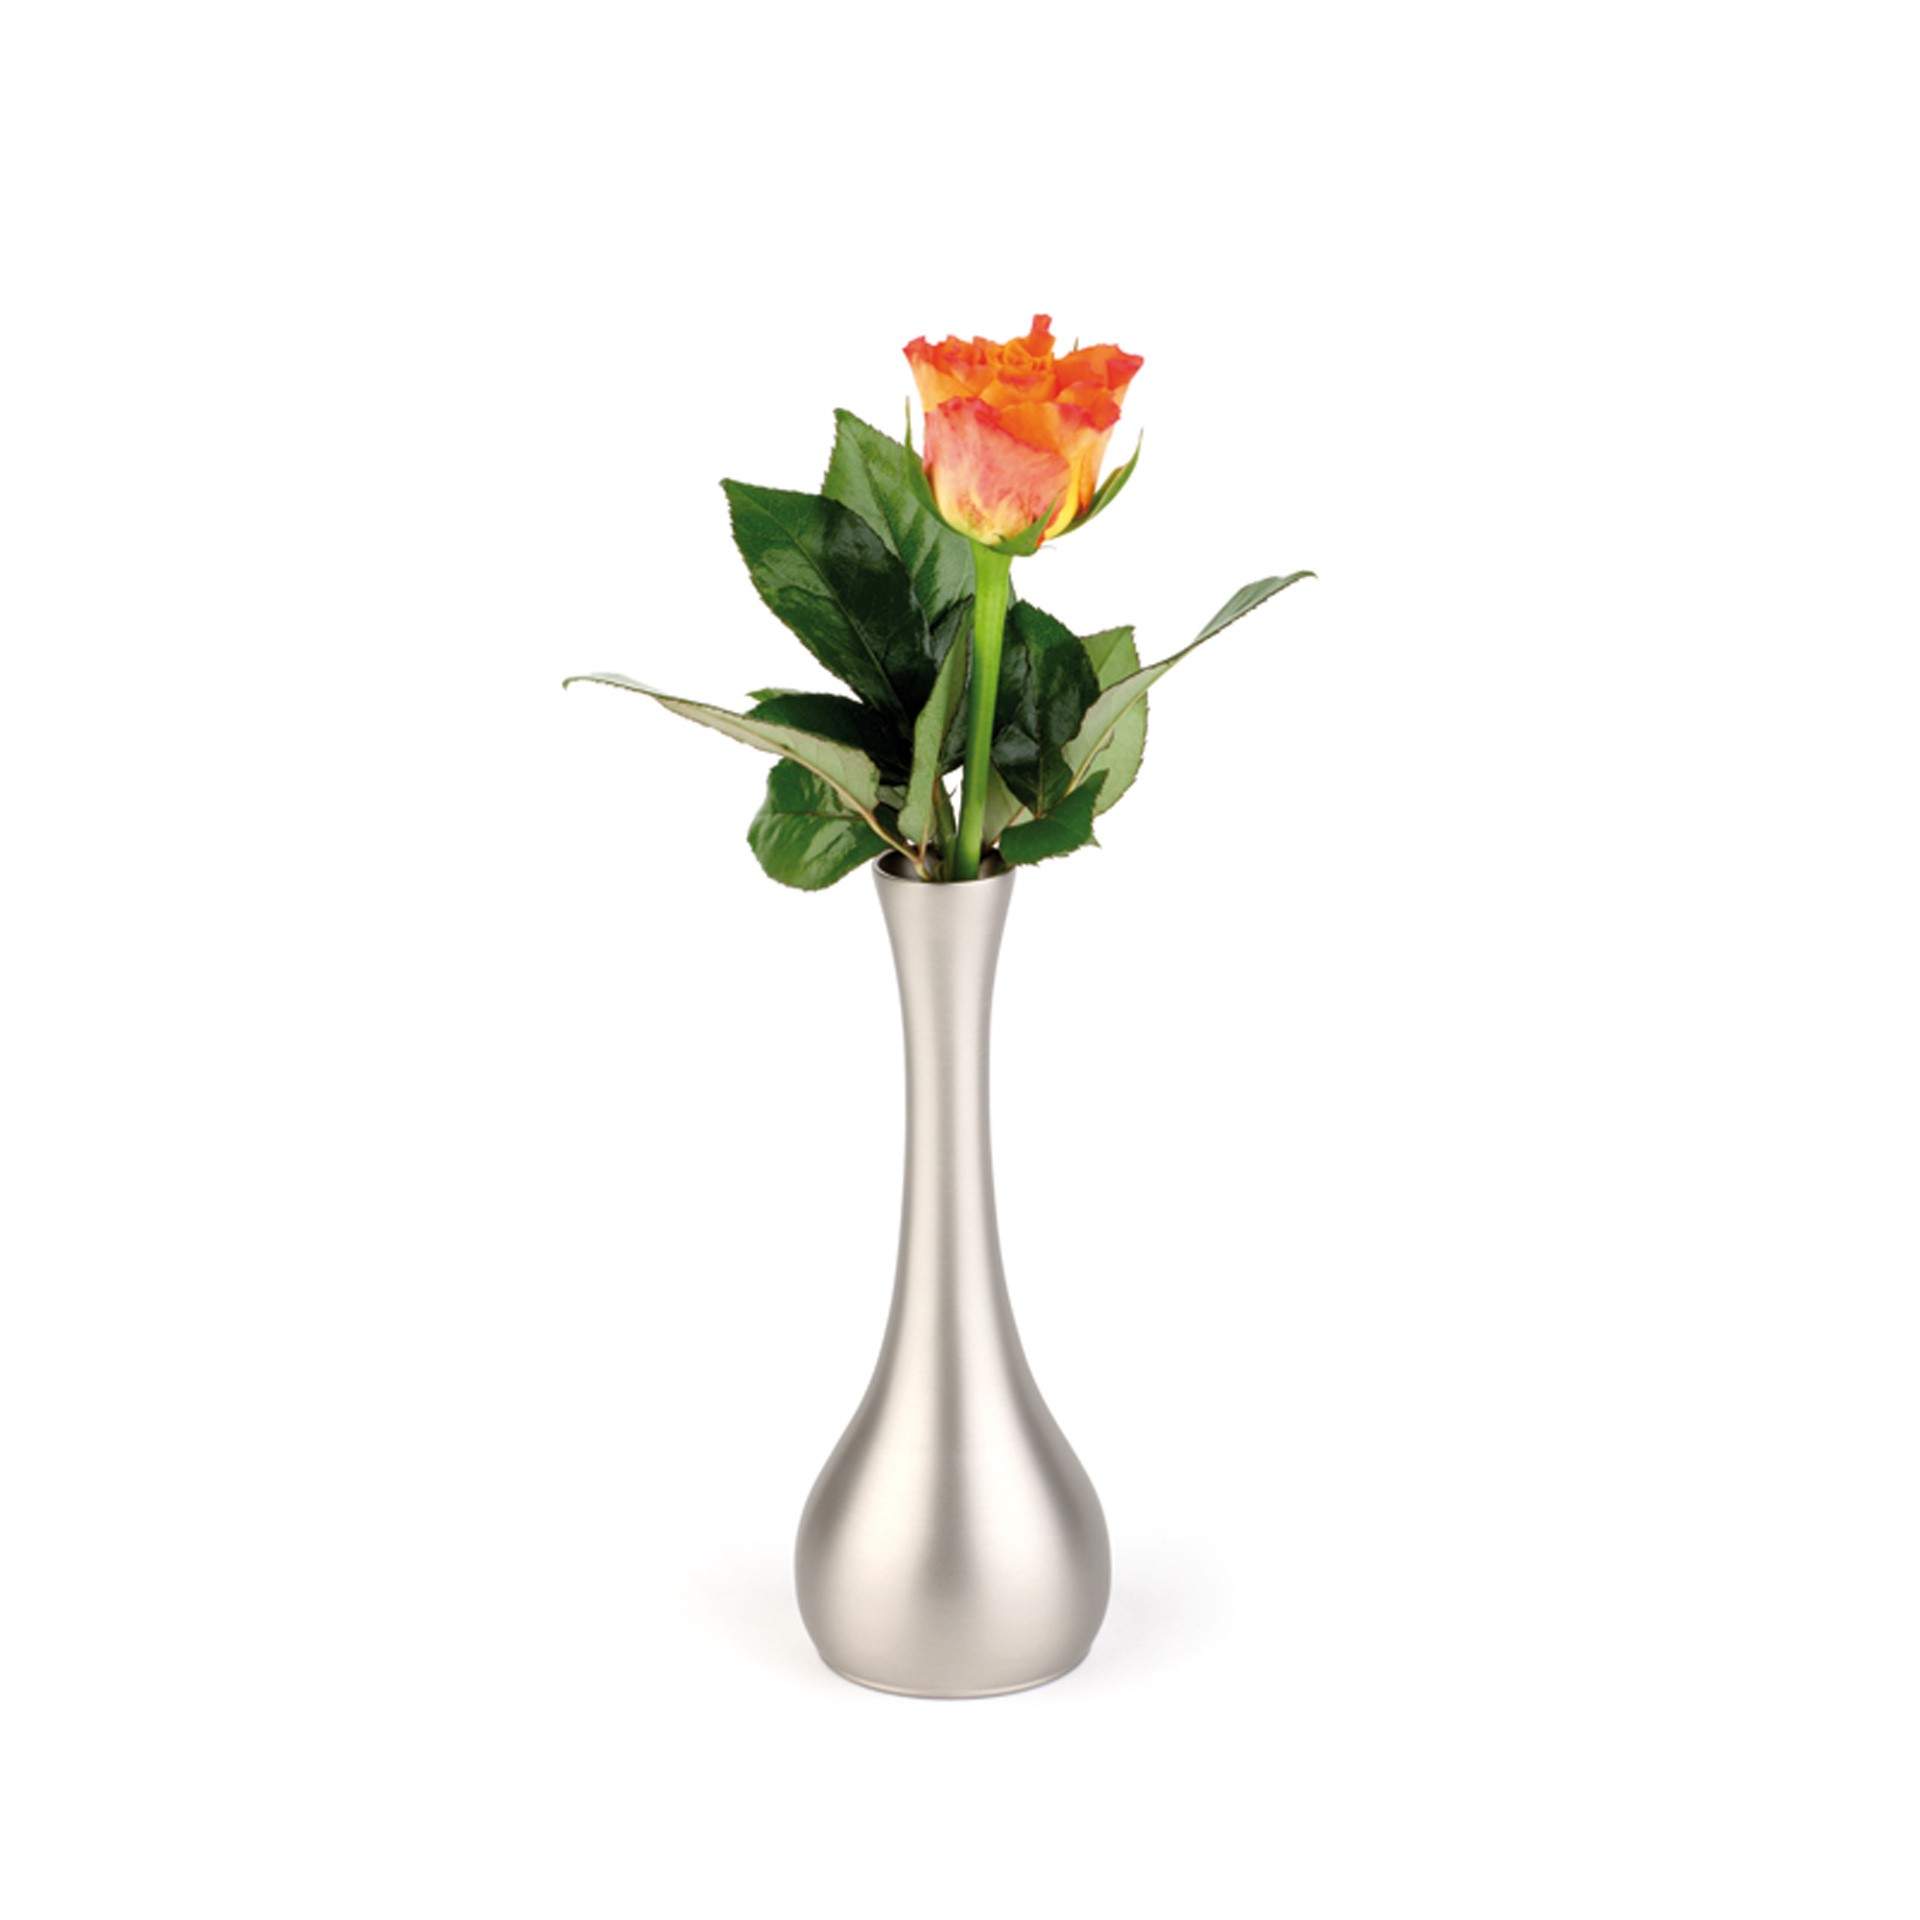 Vase - Edelstahl-Look - lackiert - bauchig - Abm. 18,0 cm - Ø 6,5 cm - Zinkdruckguss - 4017-B